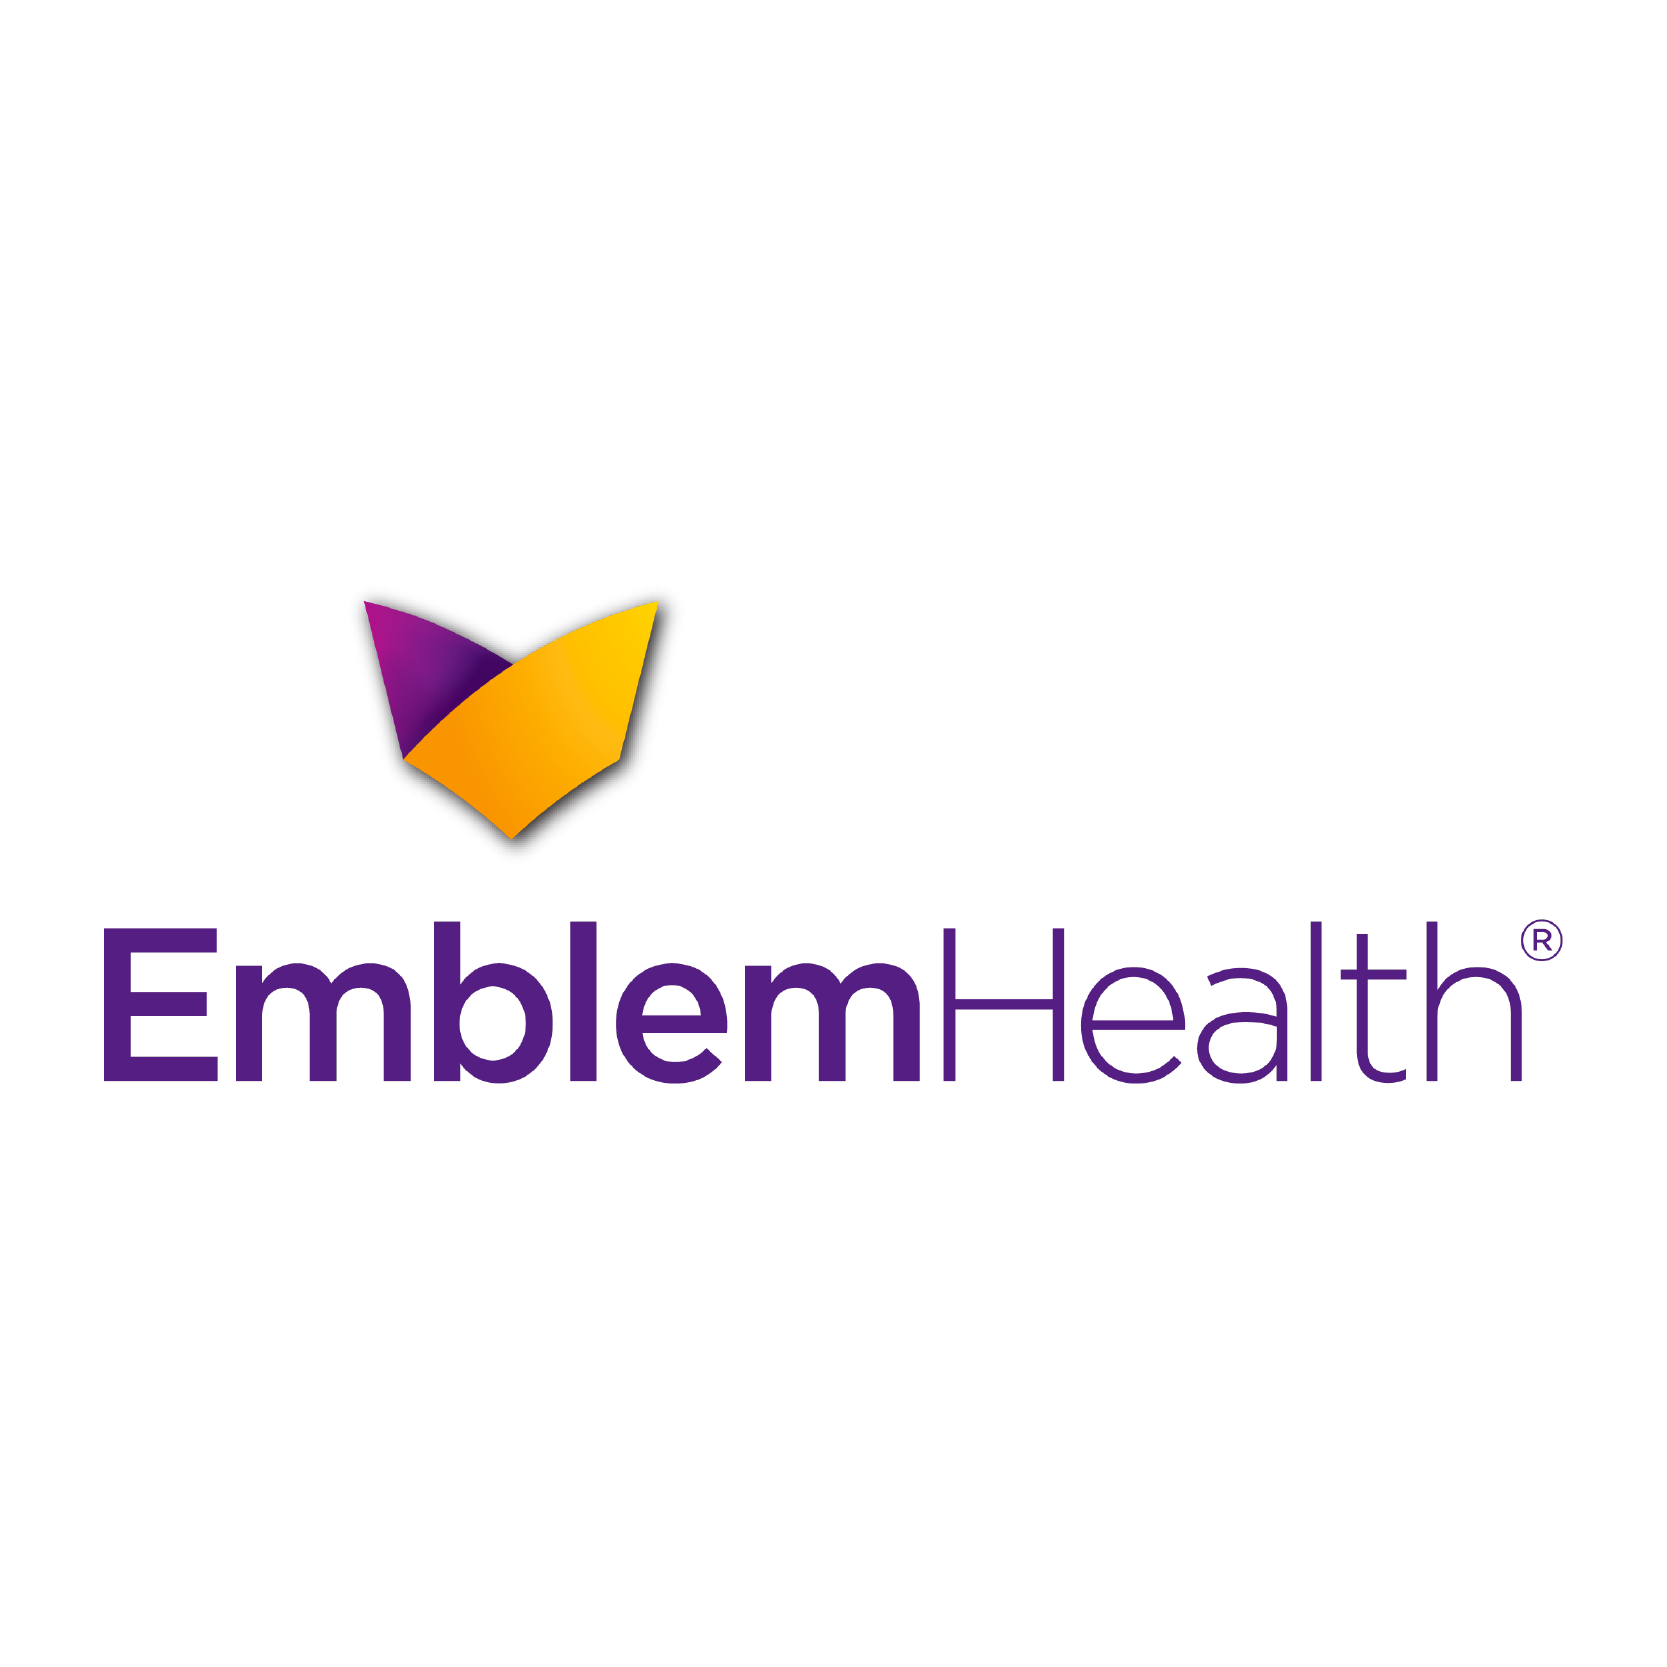 Emblemhealth brokers adventist health system sunbelt ceo